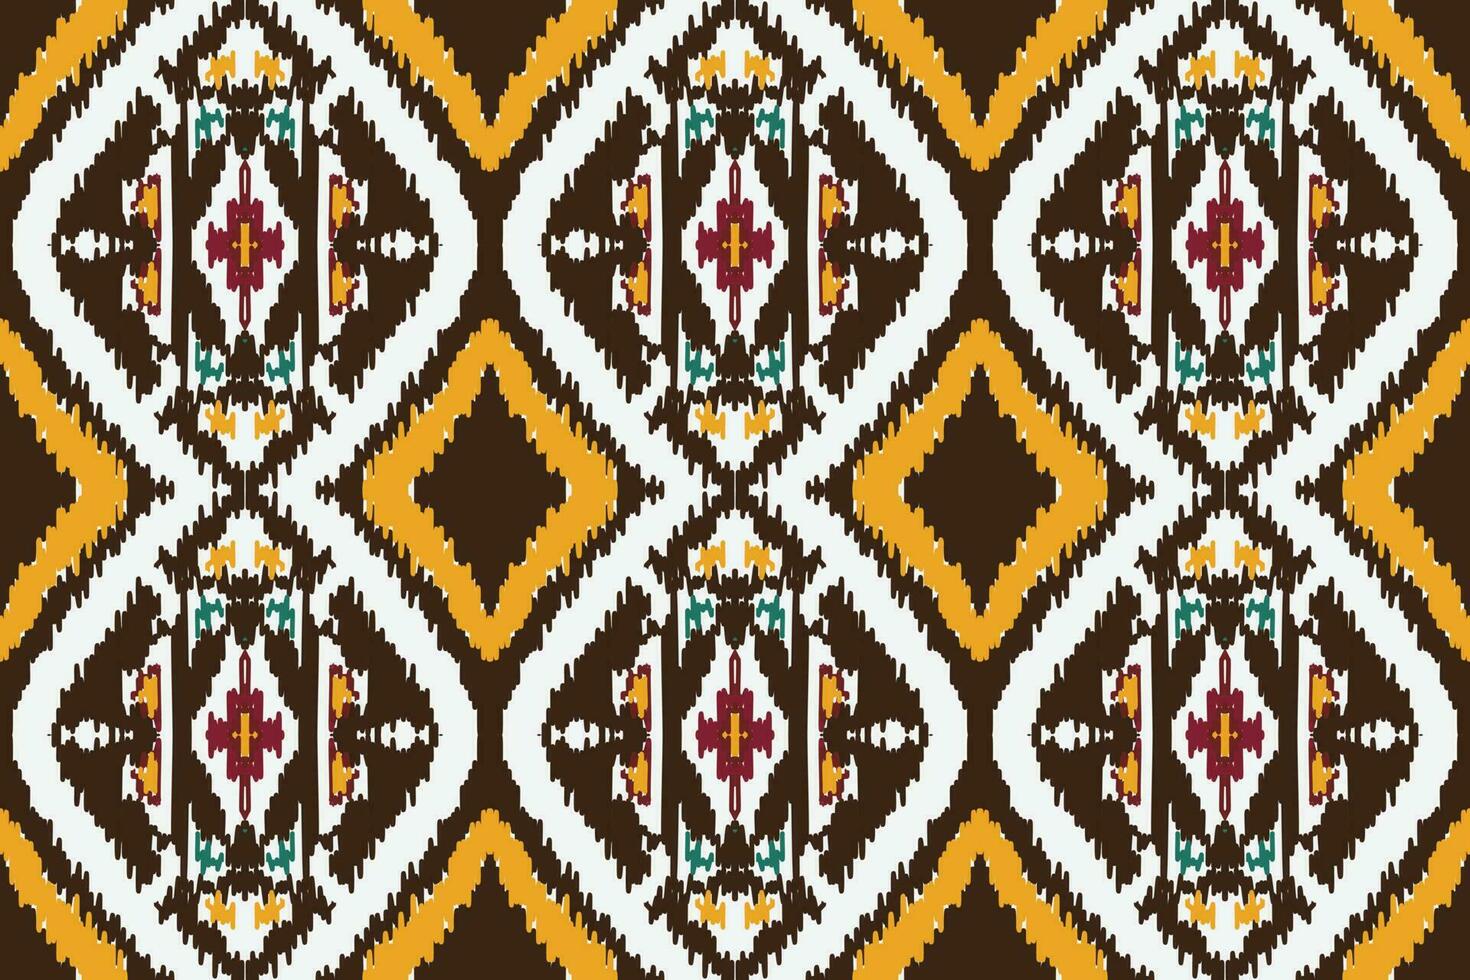 africano motivo ikat paisley bordado fundo. geométrico étnico oriental padronizar tradicional. ikat asteca estilo abstrato vetor ilustração. Projeto para impressão textura, tecido, saree, sari, tapete.